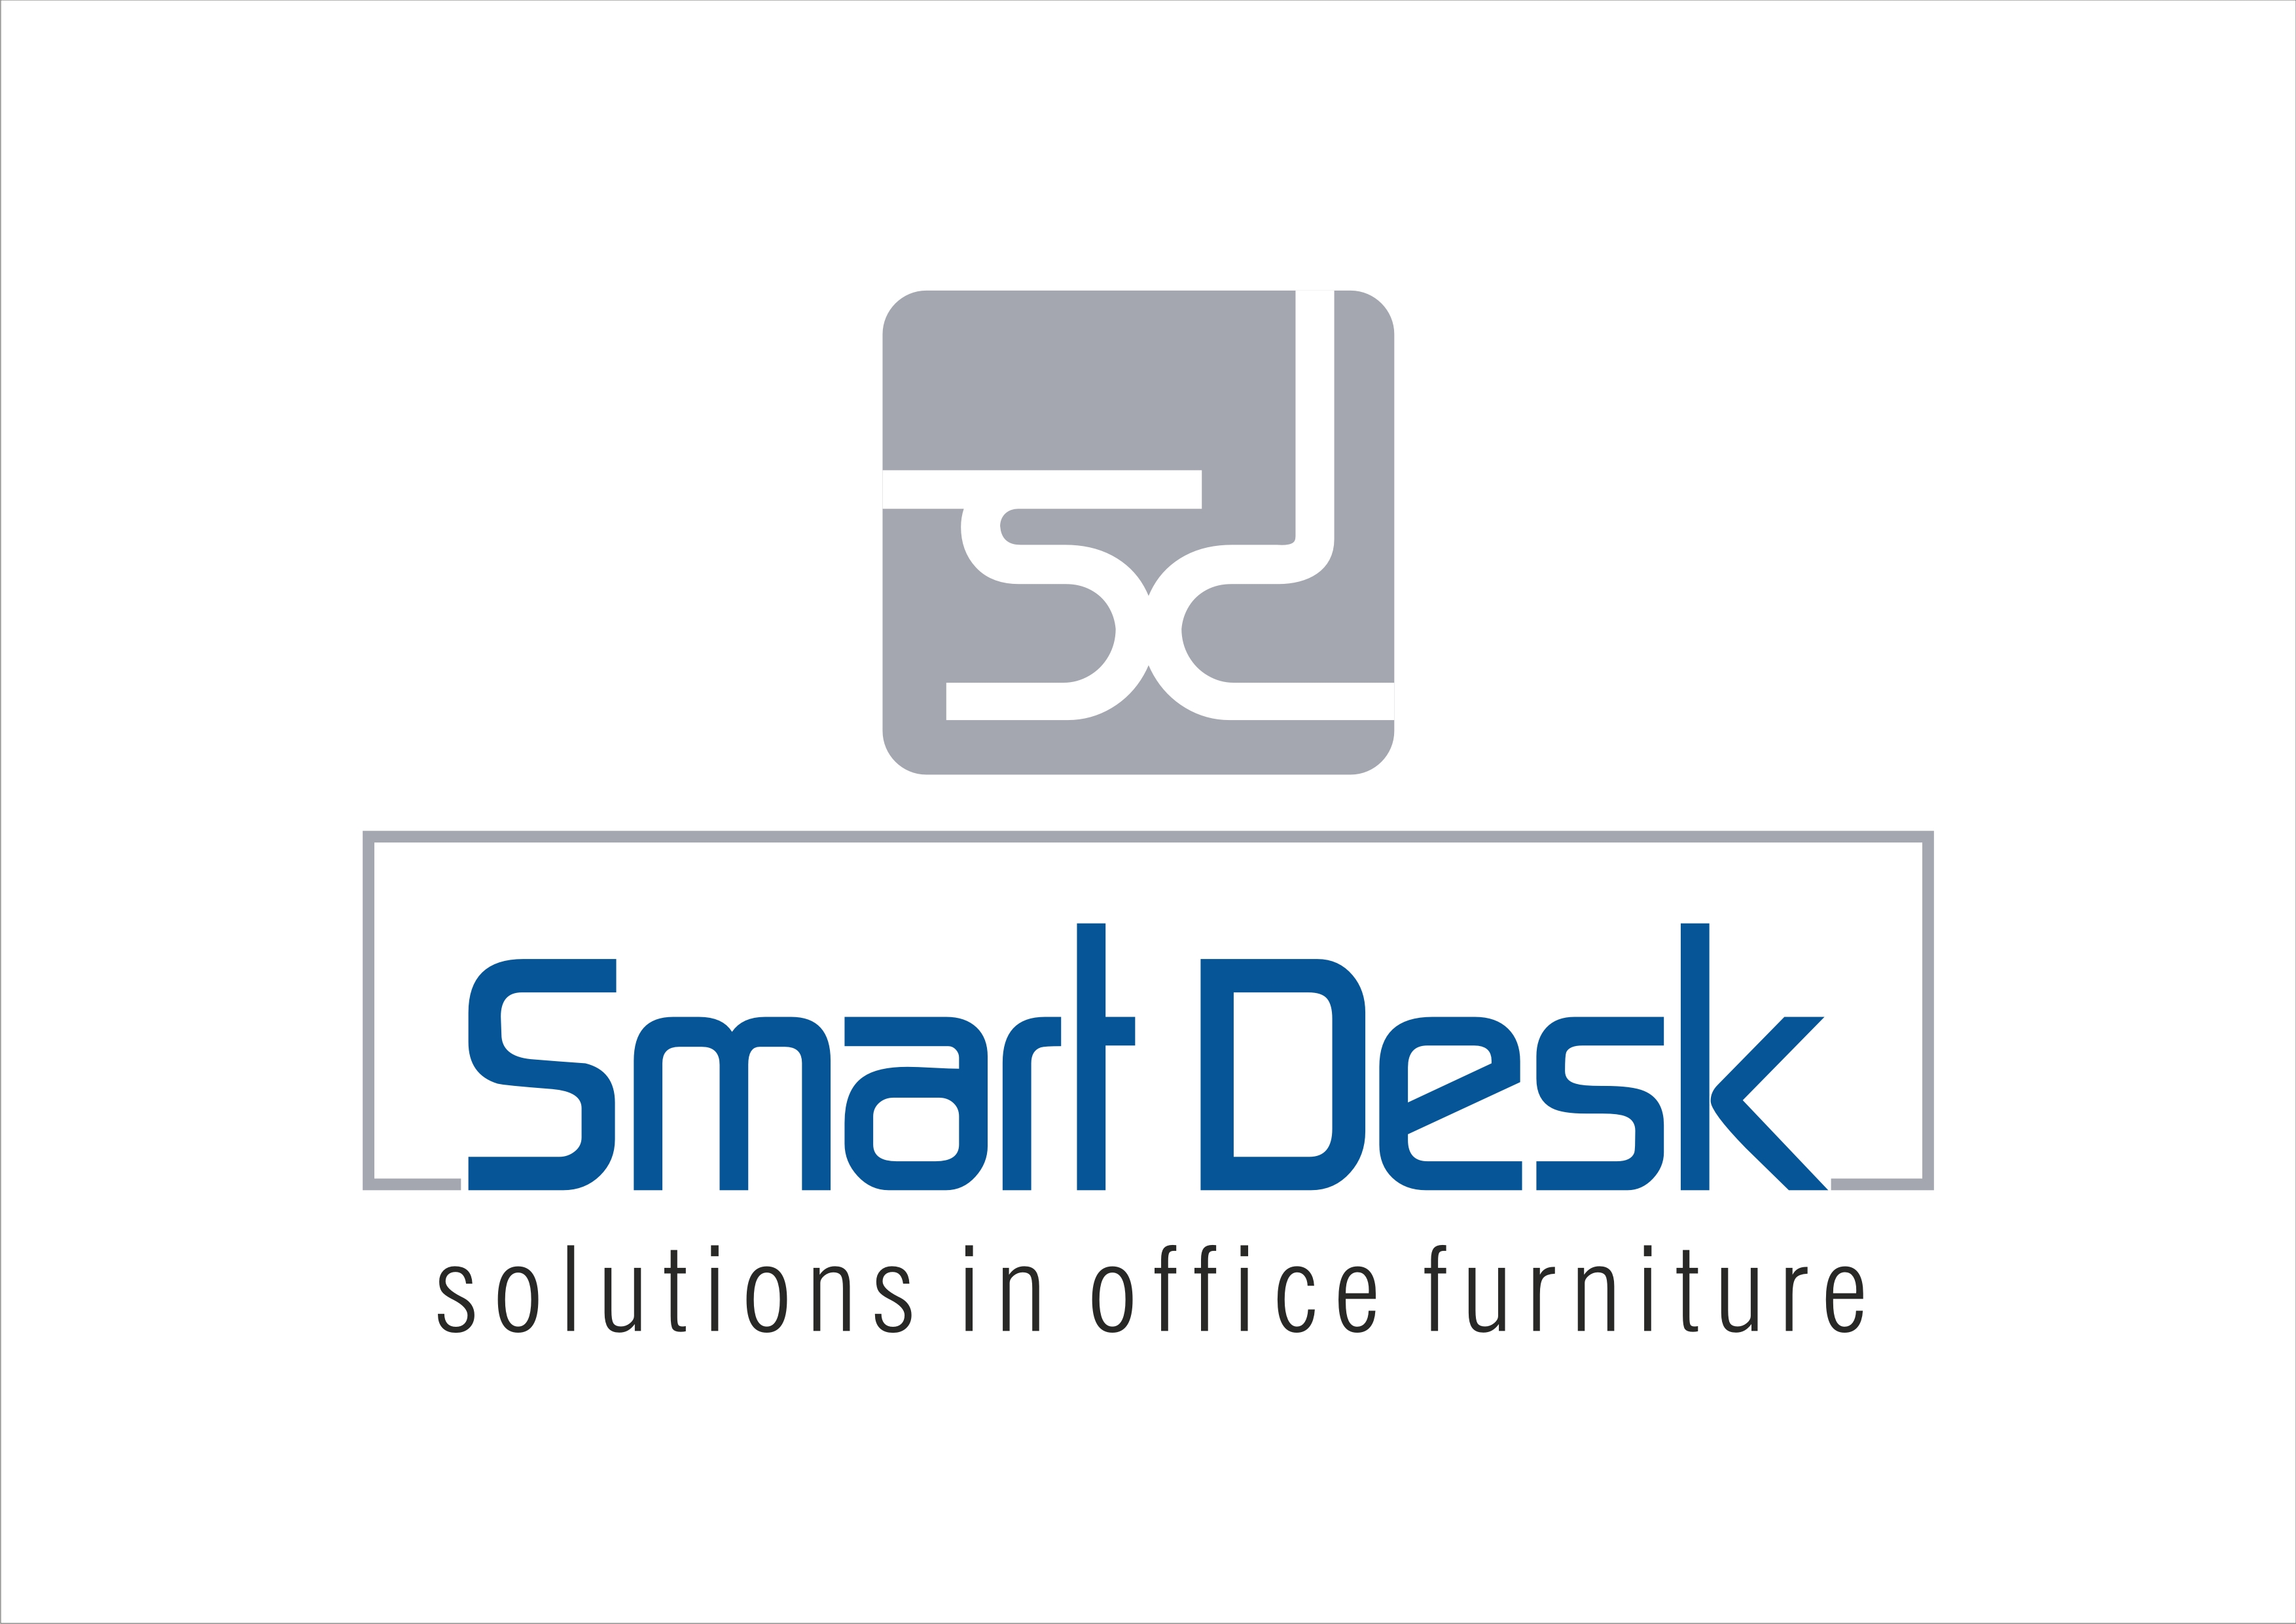 Smark Desk